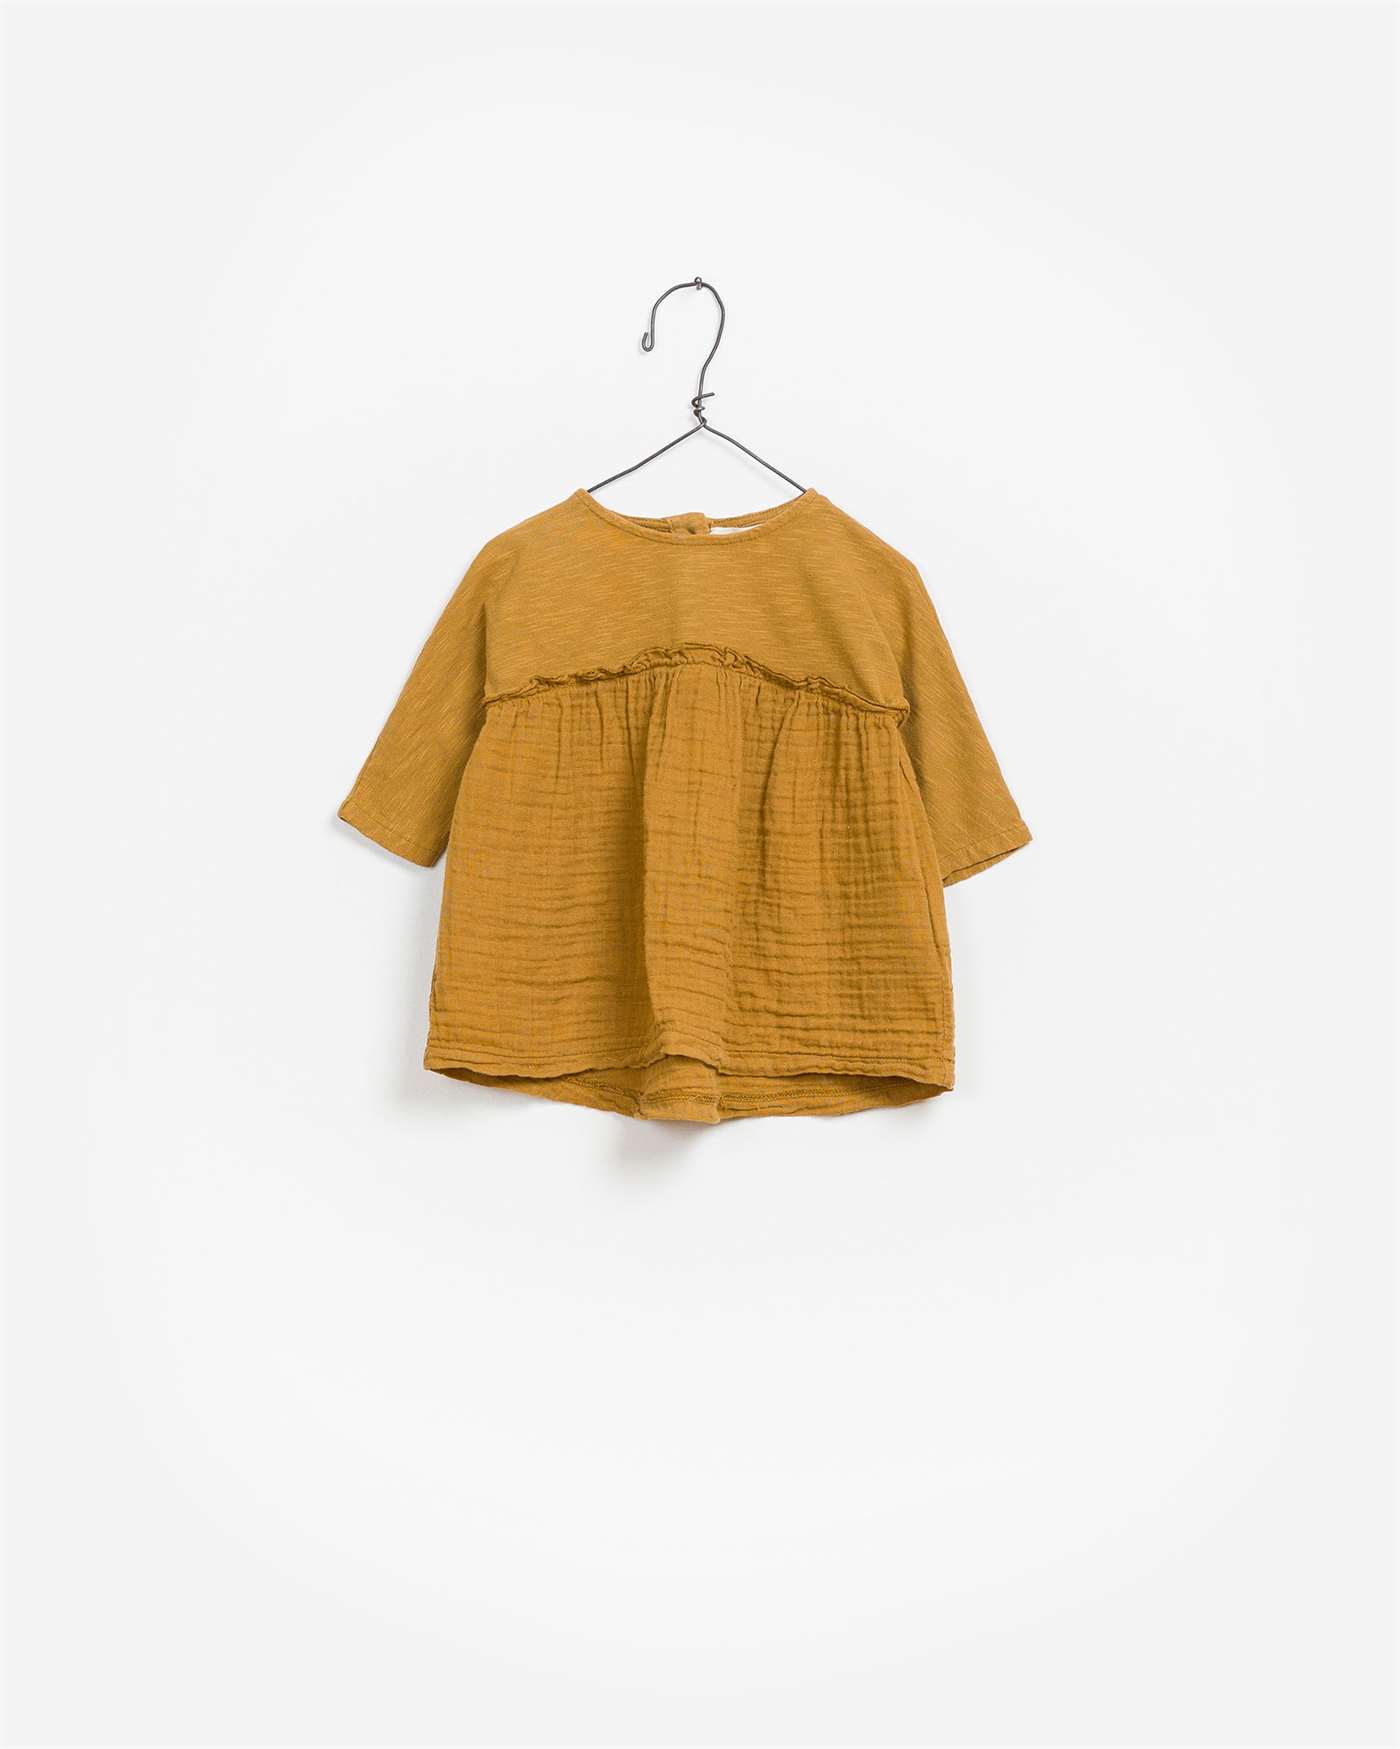 BeeBoo|BeeBoo PlayUp vêtement bébé baby cloth robe combi dress coton bio organic cotton moutarde yellow